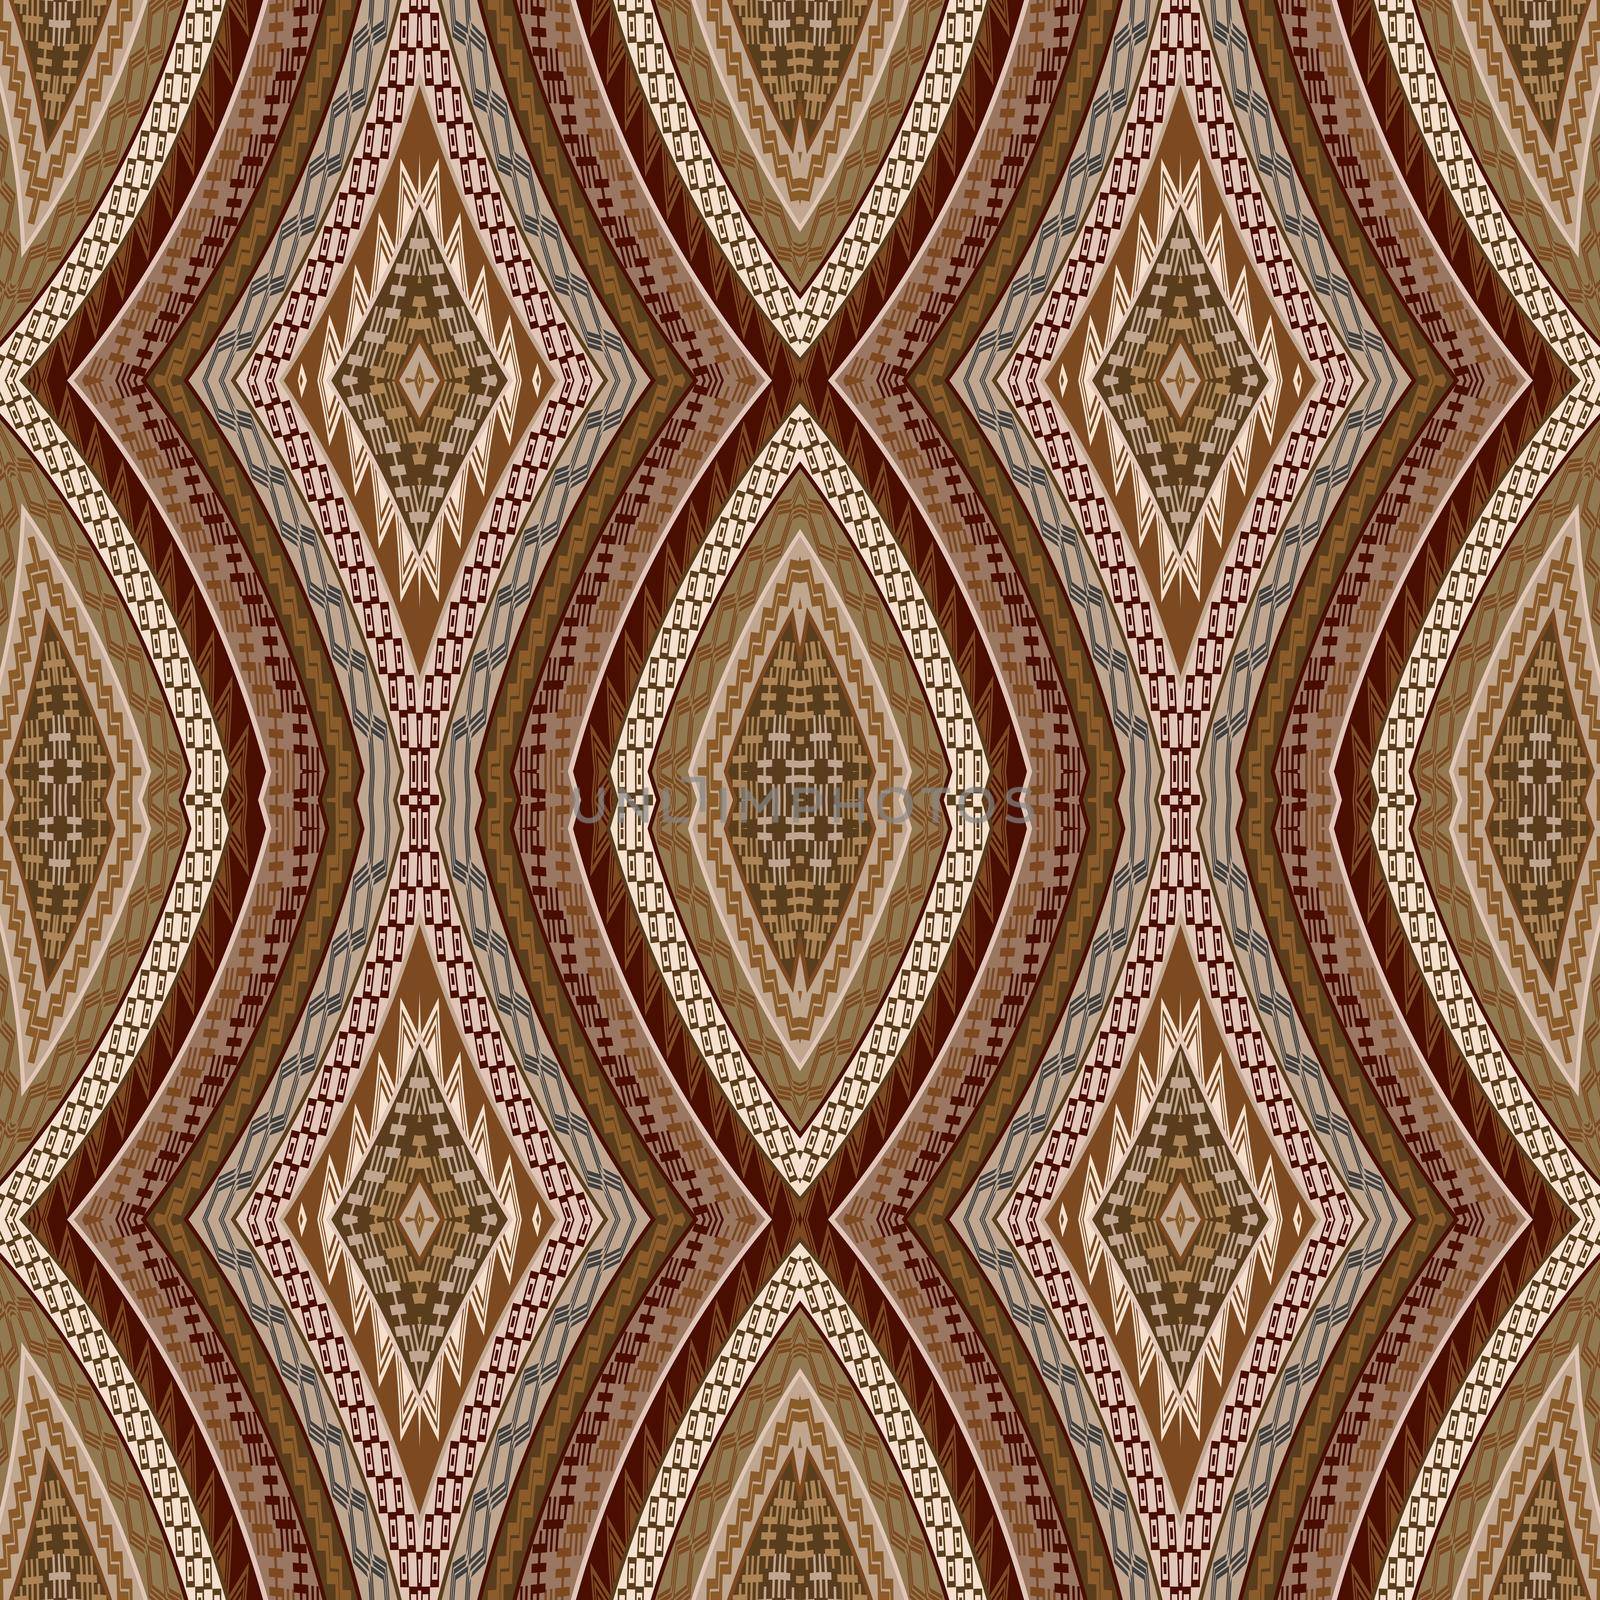 Geometric decorative seamless pattern with brown ethnic motifs